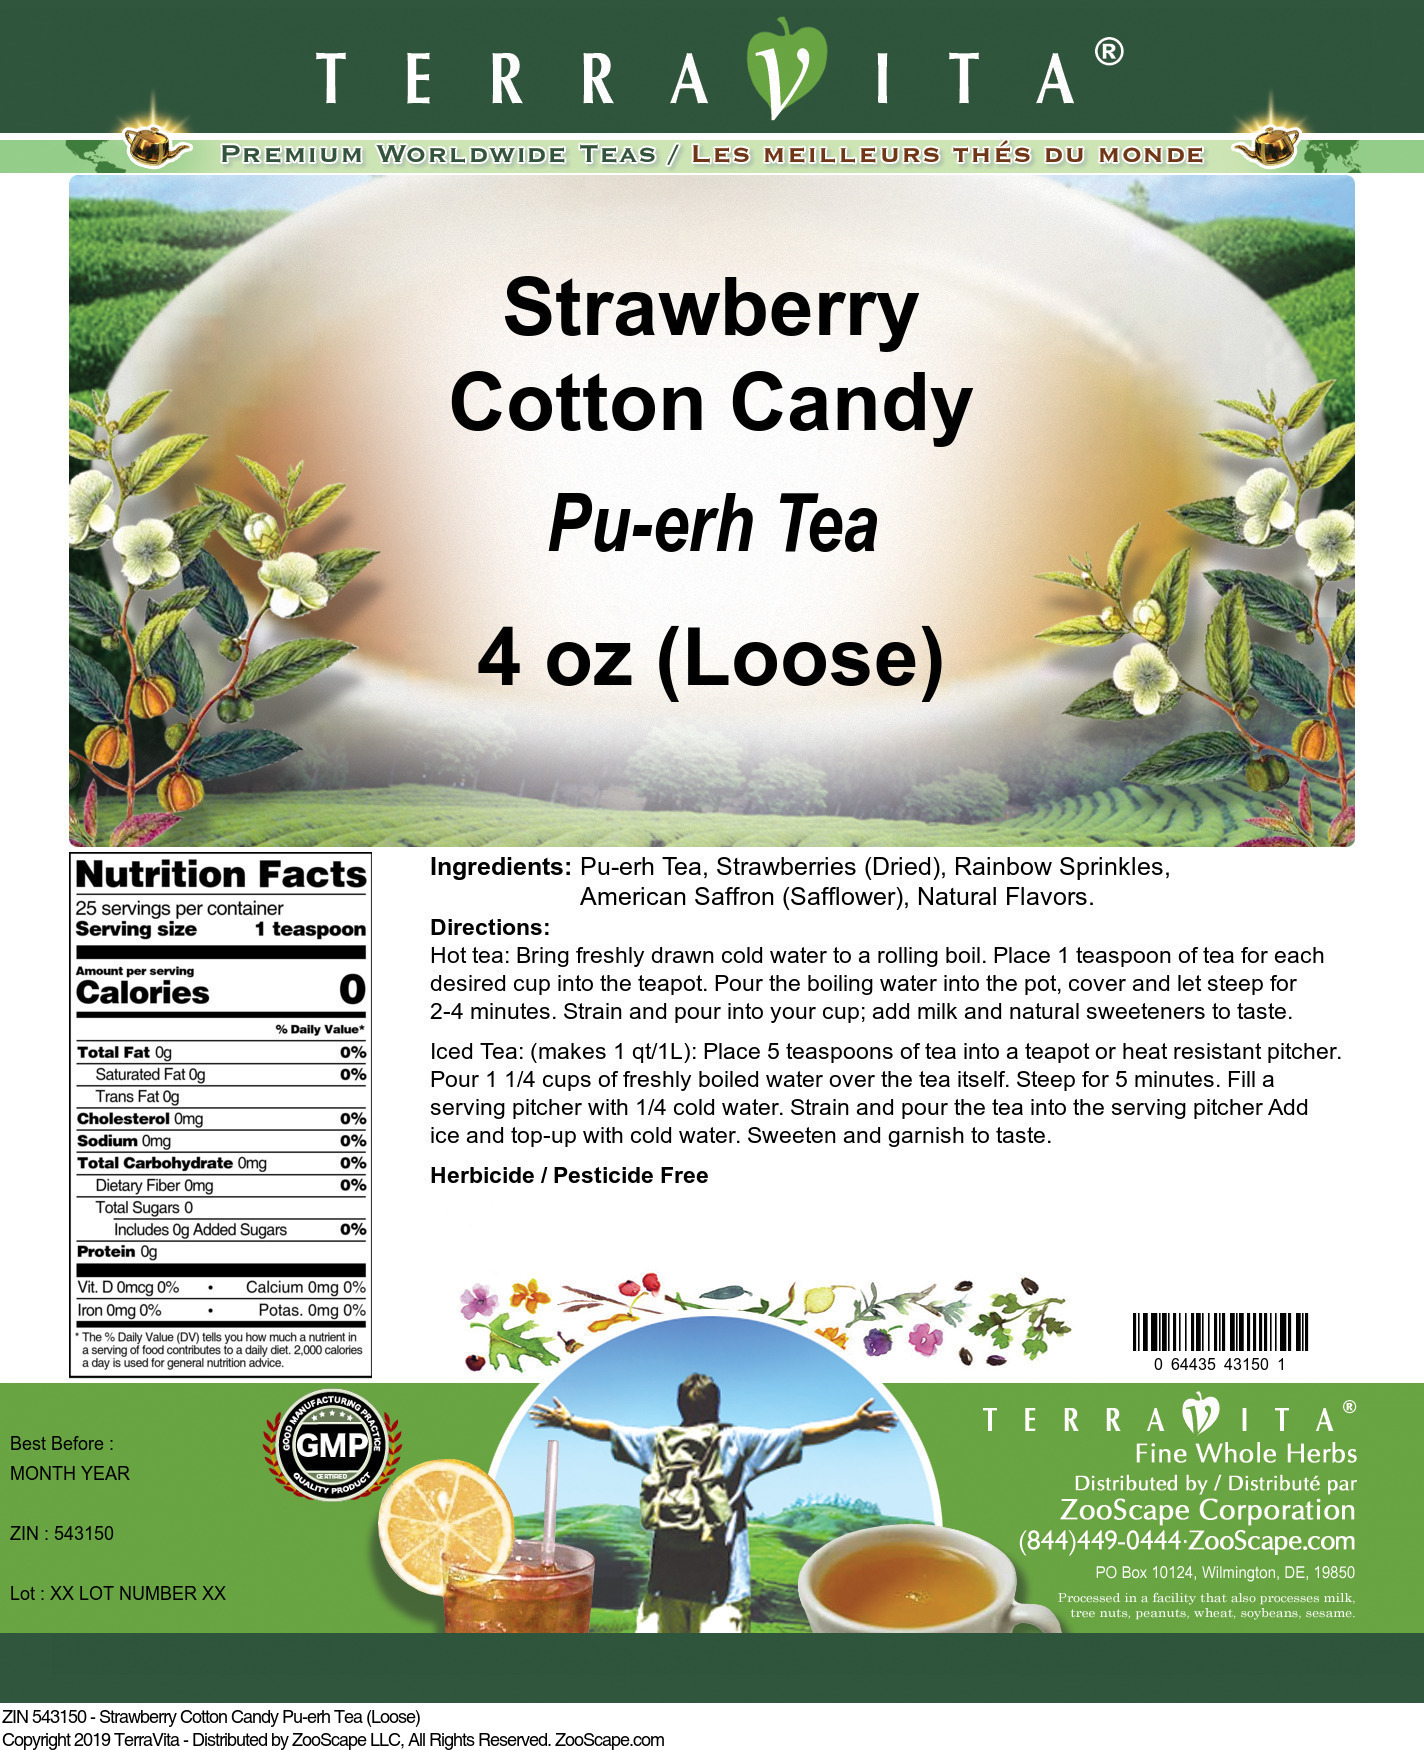 Strawberry Cotton Candy Pu-erh Tea (Loose) - Label